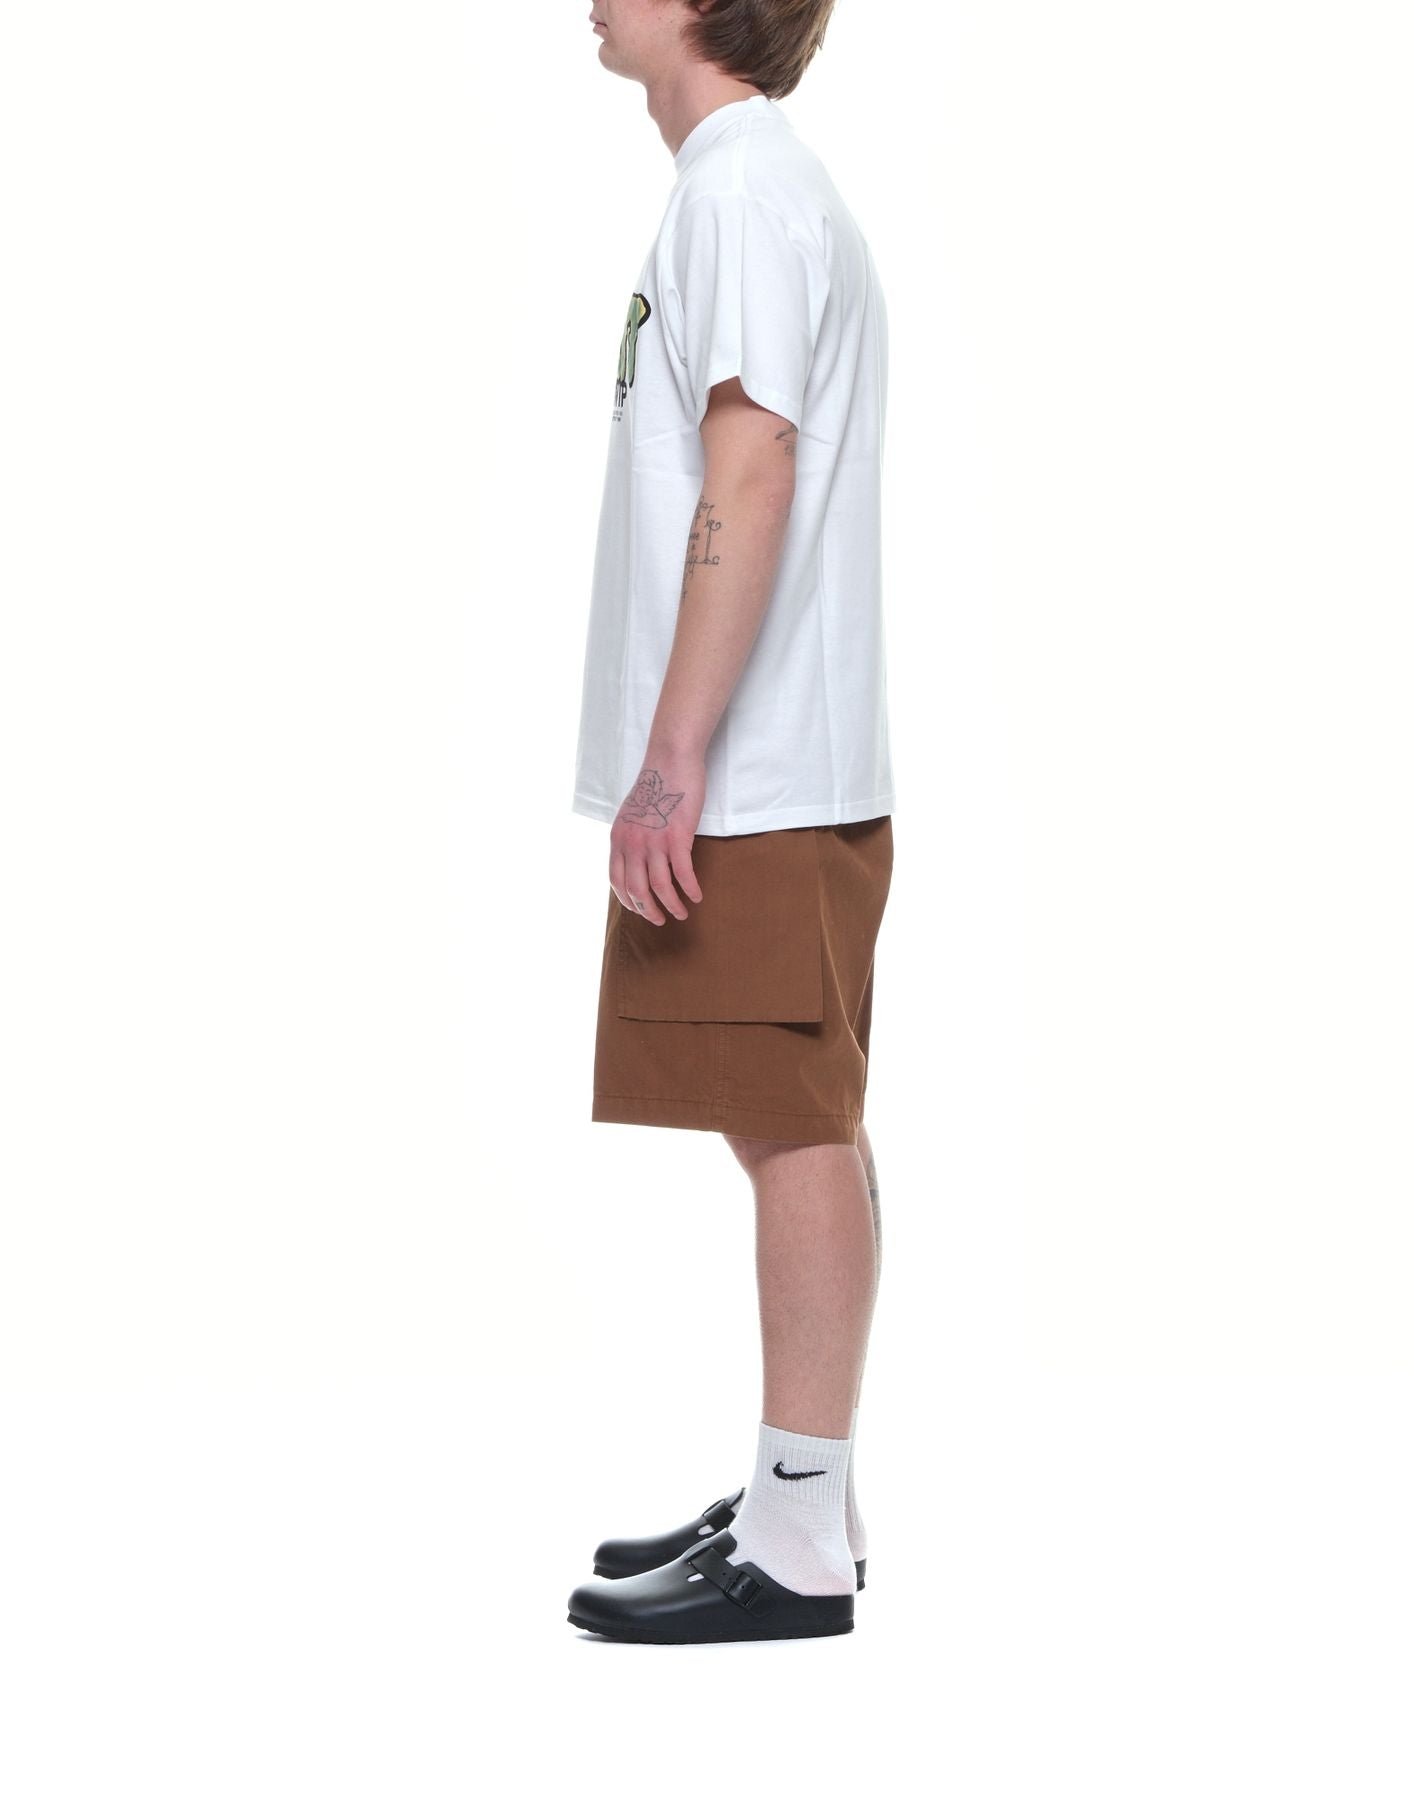 T-shirt Man I033160 T-shirt Drip White Carhartt Wip